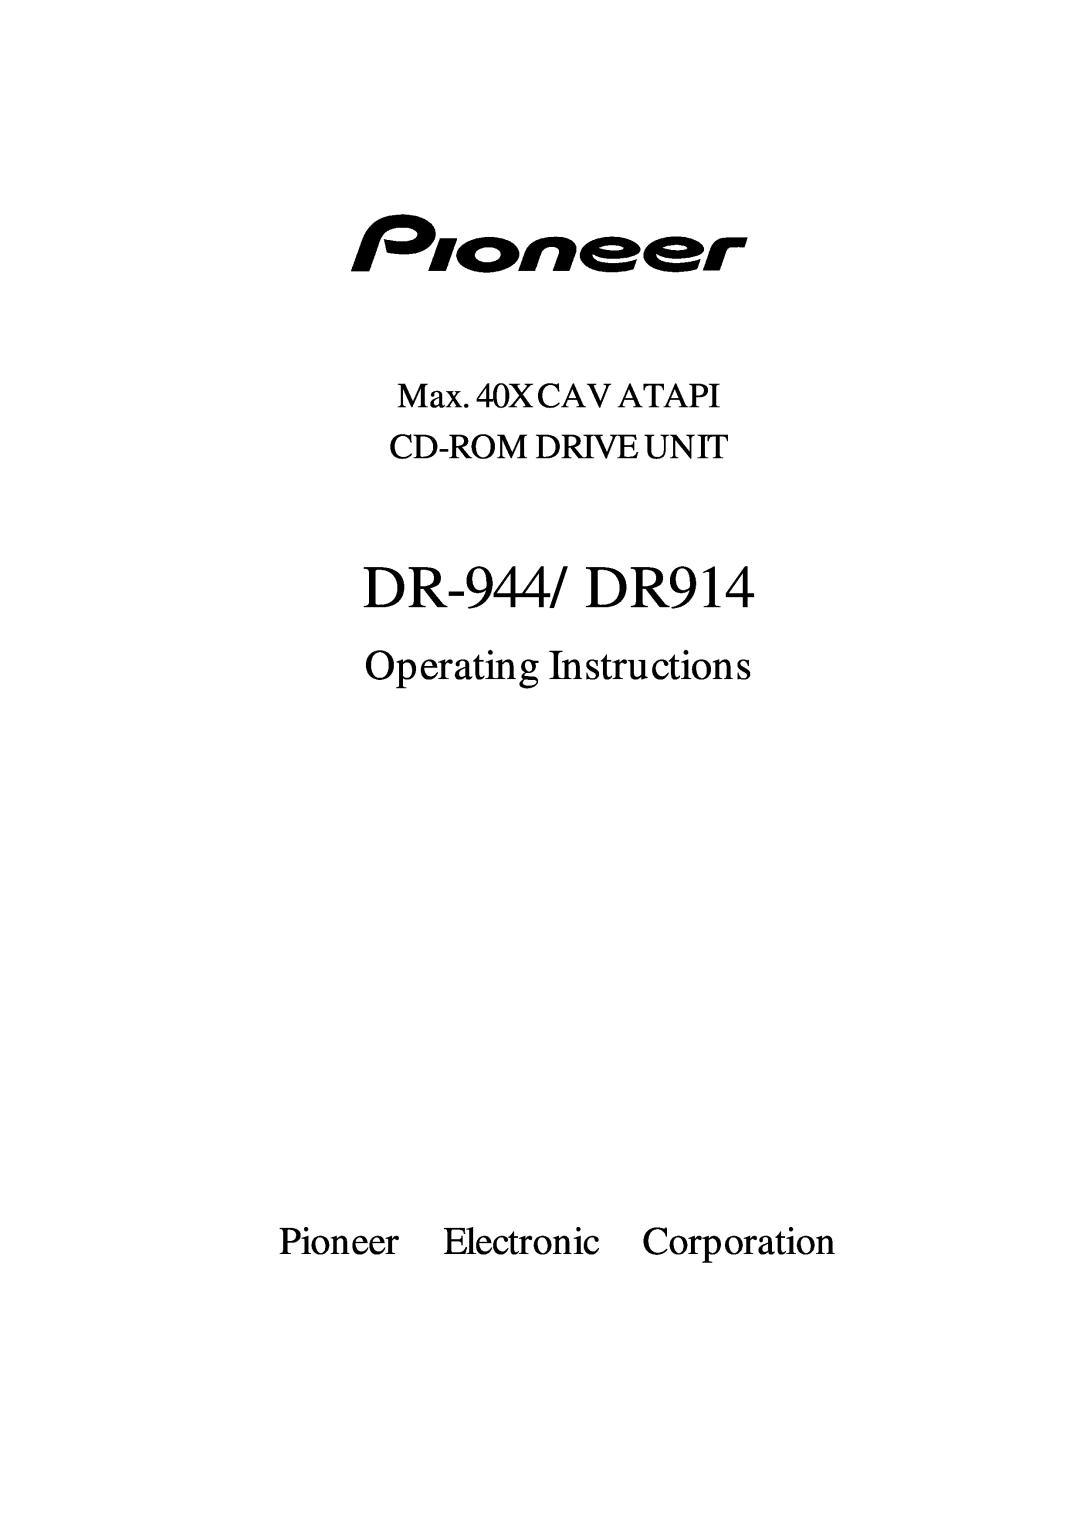 Pioneer operating instructions Max. 40X CAV ATAPI CD-ROM DRIVE UNIT, DR-944/DR914, Operating Instructions 